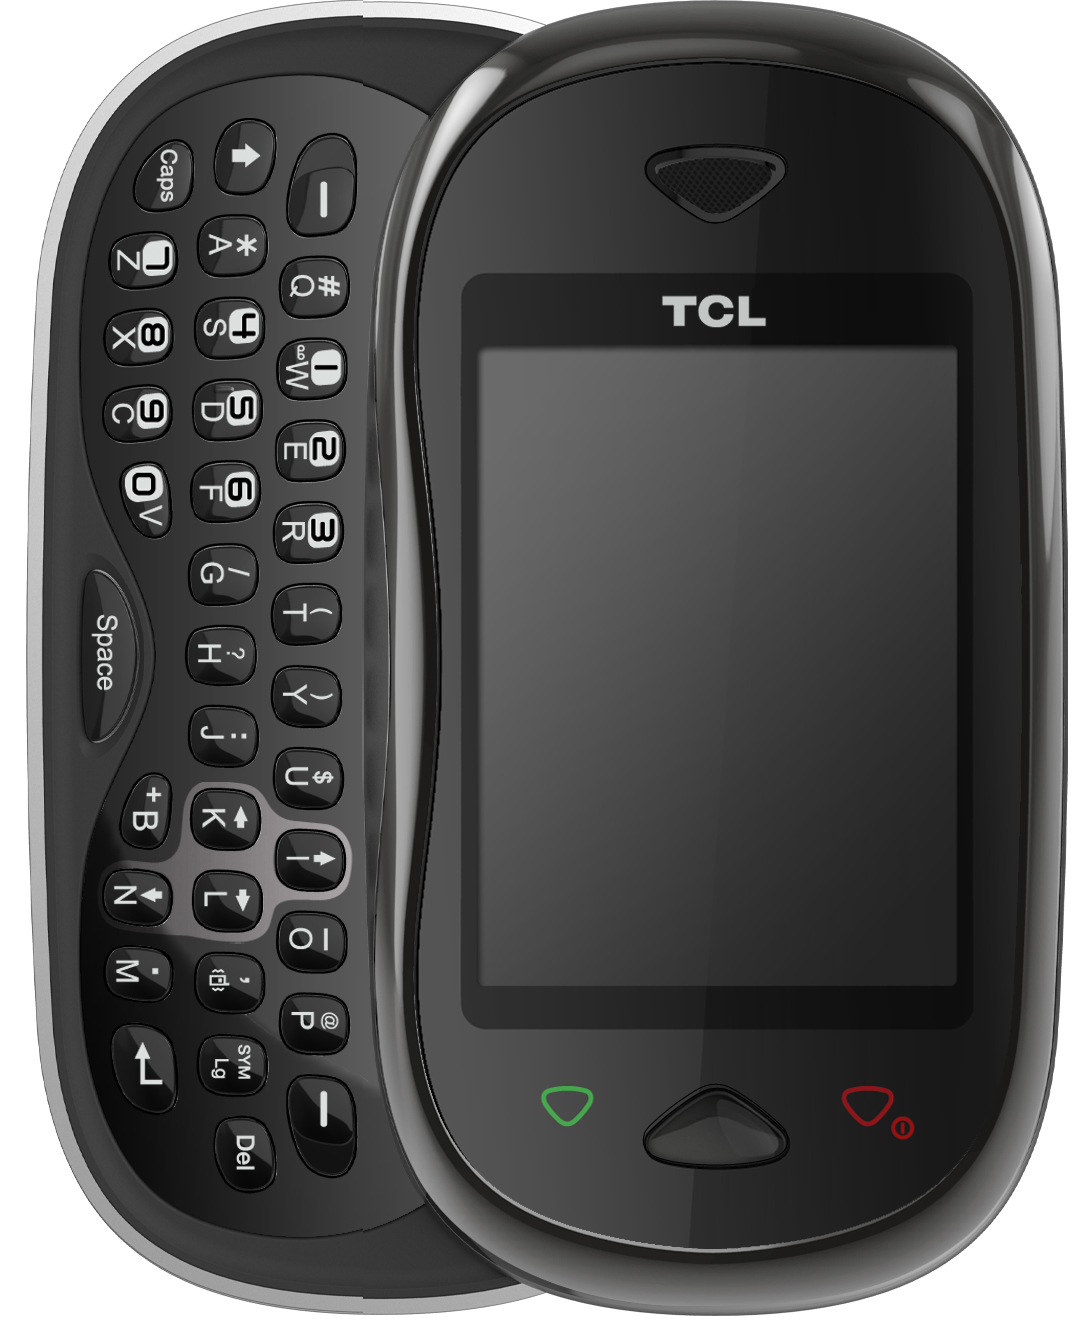 TCL i880